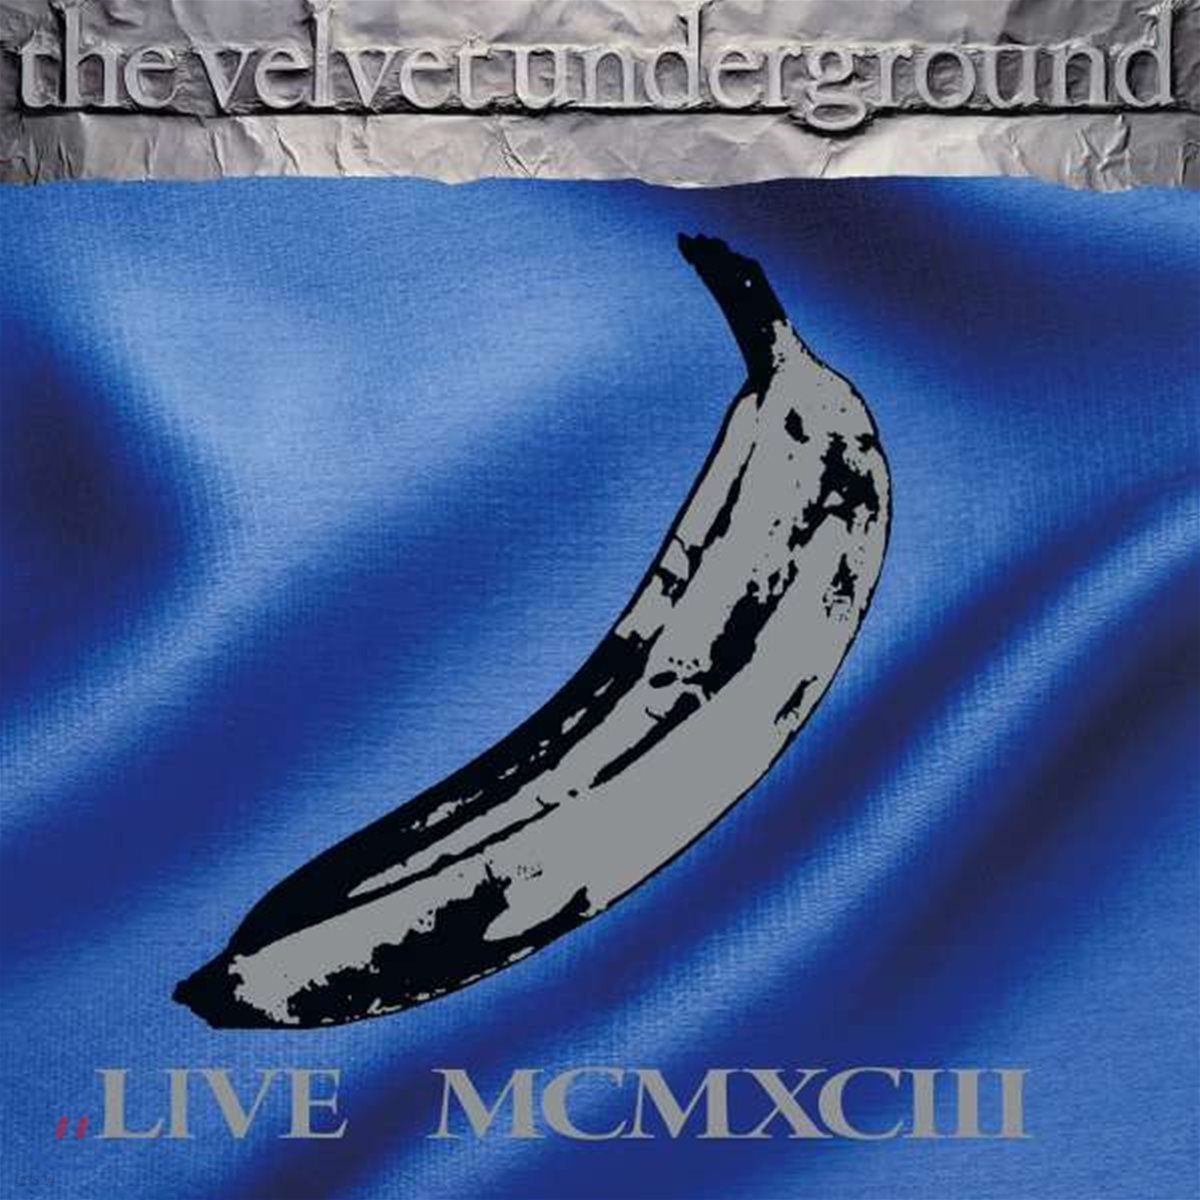 Velvet Underground (벨벳 언더그라운드) - Live MCMXCIII (1993년 라이브) [블루 컬러 한정반 4 LP]